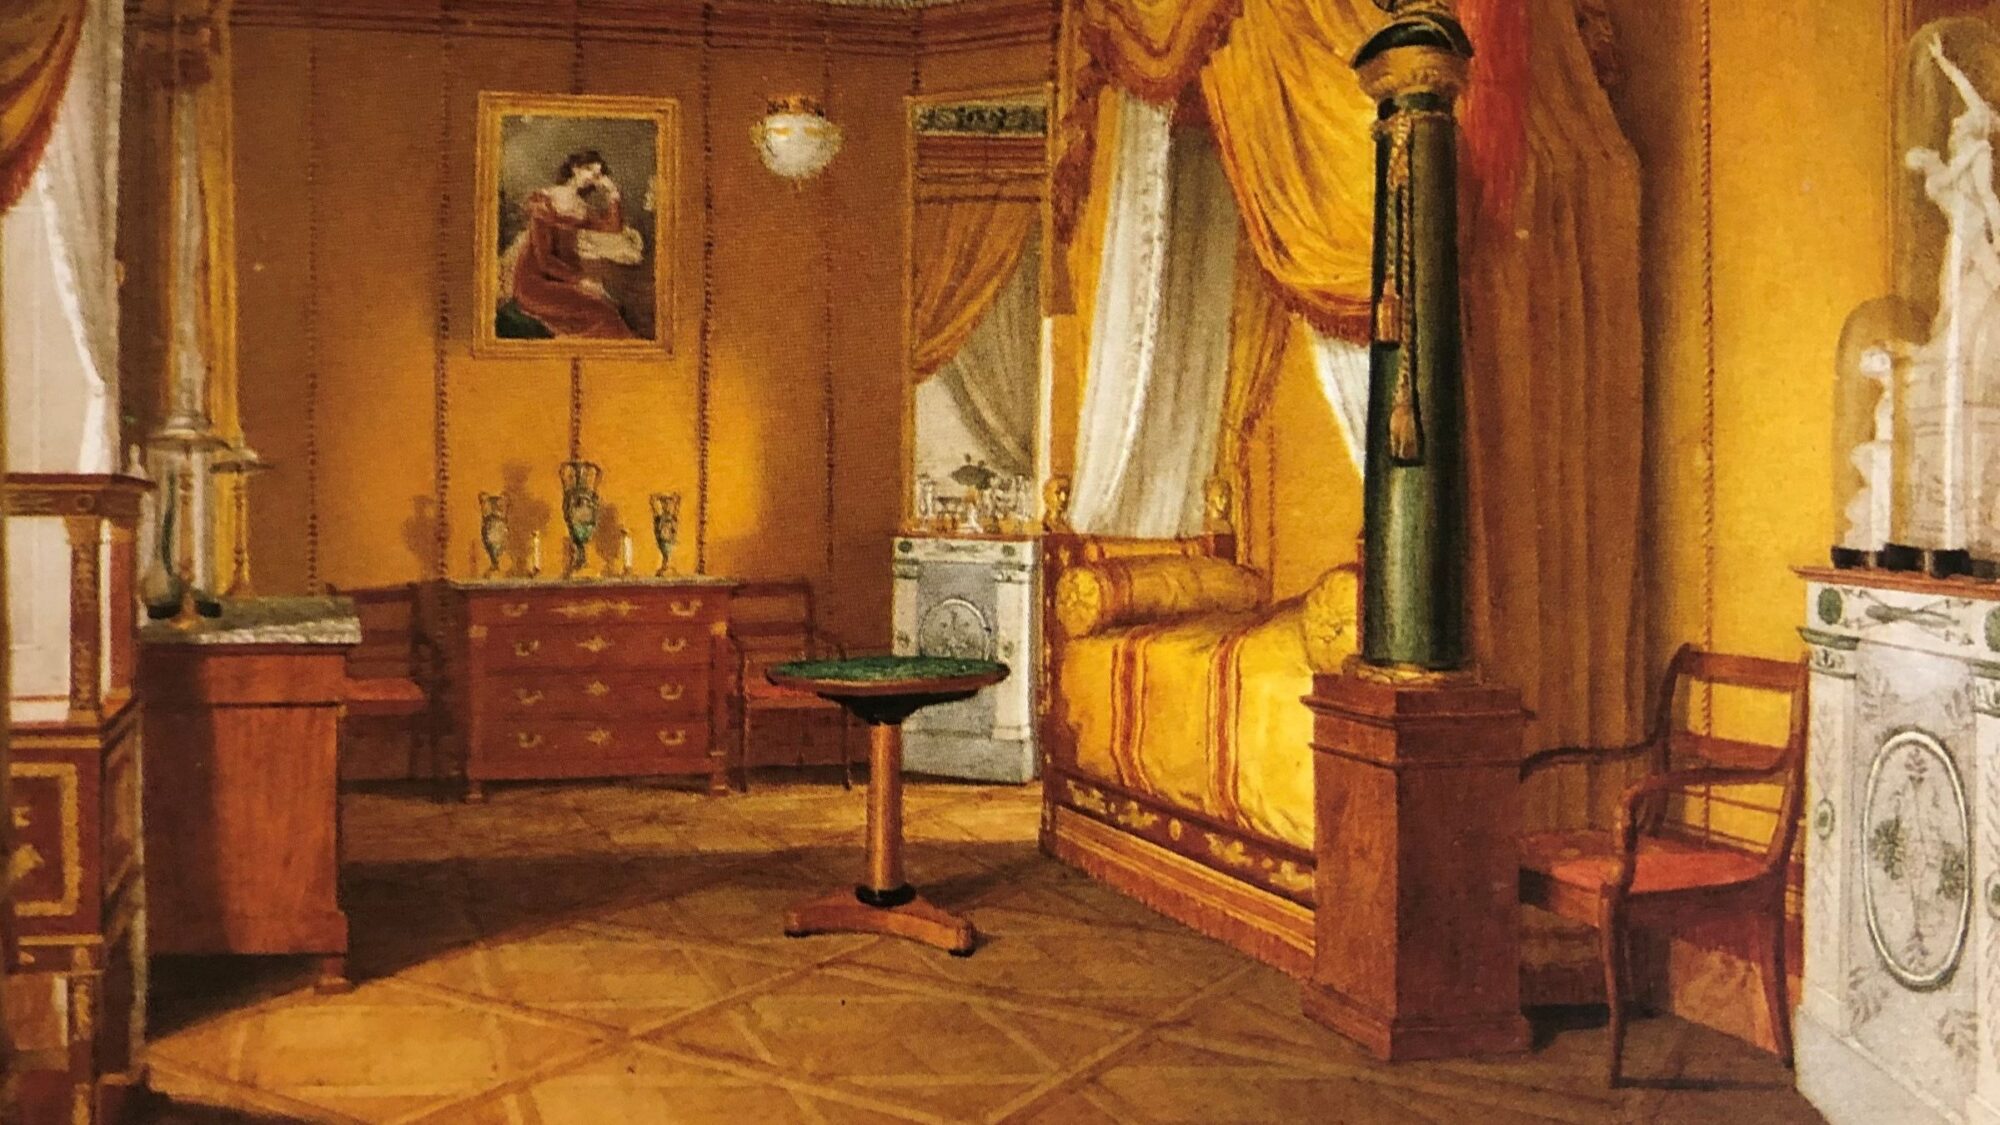 parquet flooring used in domestic interior late ninteenth century